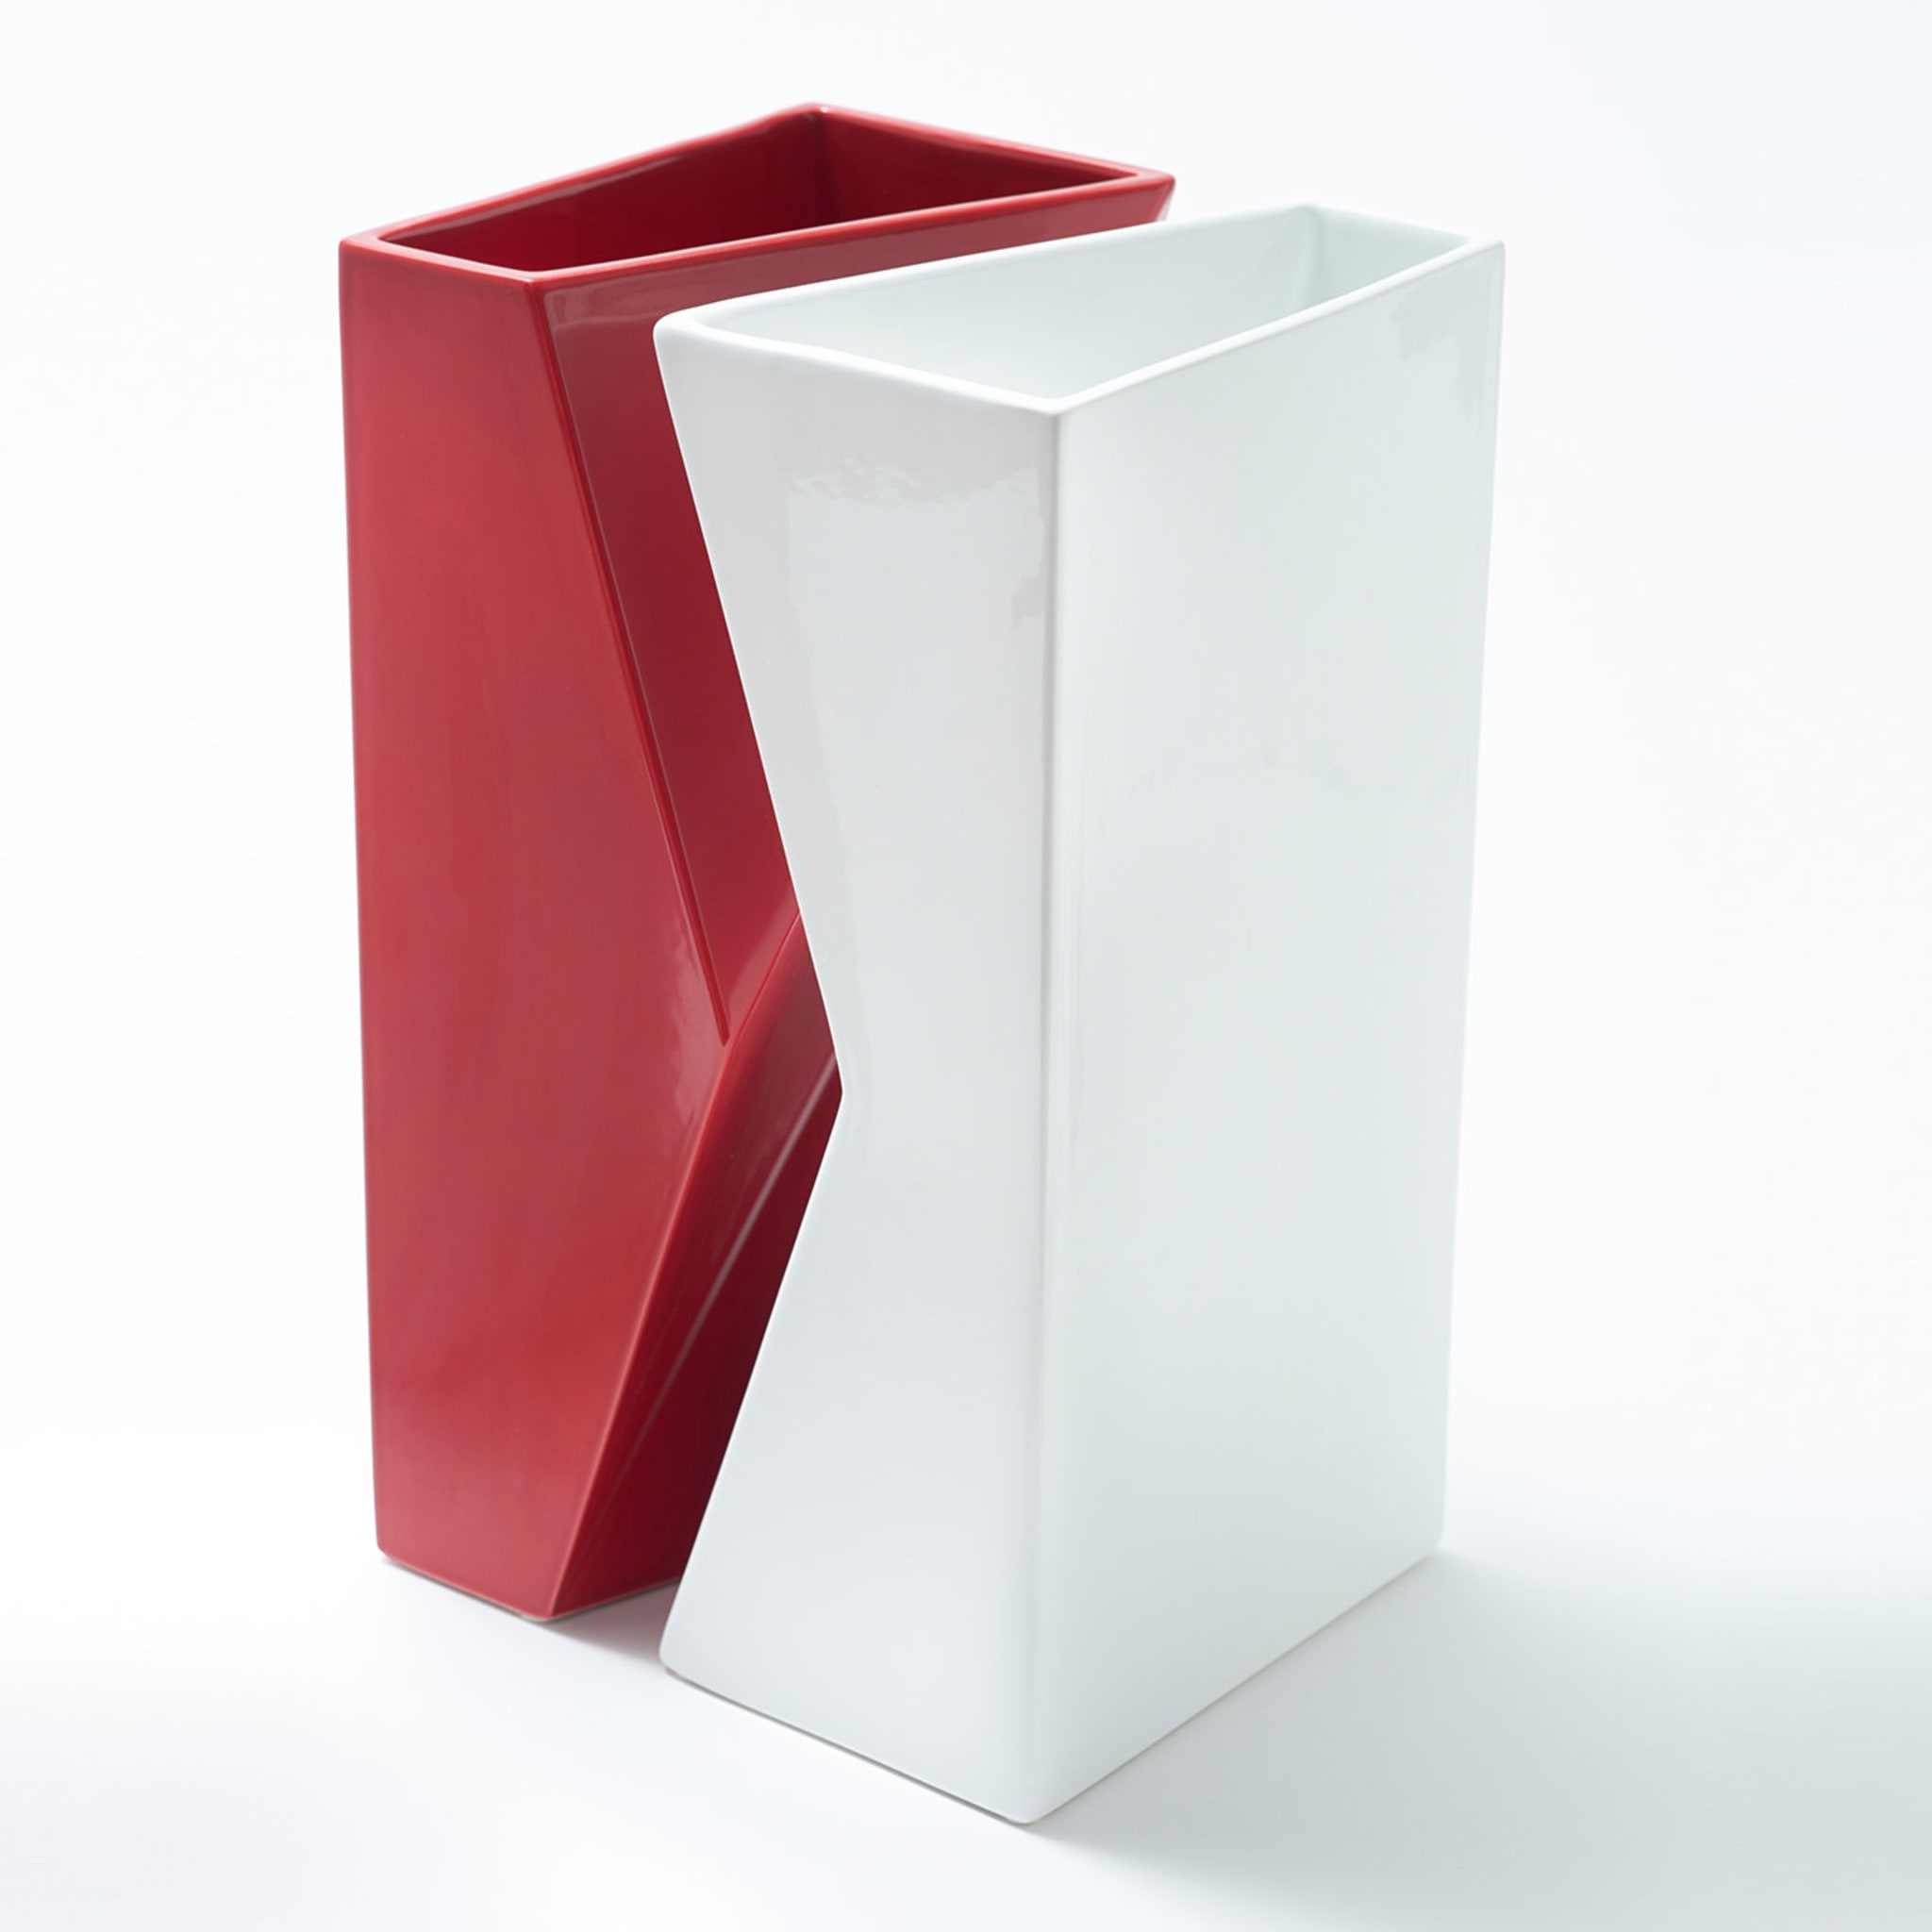 Verso Set of 2 Red and White Vases by Antonio Saporito - Alternative view 1